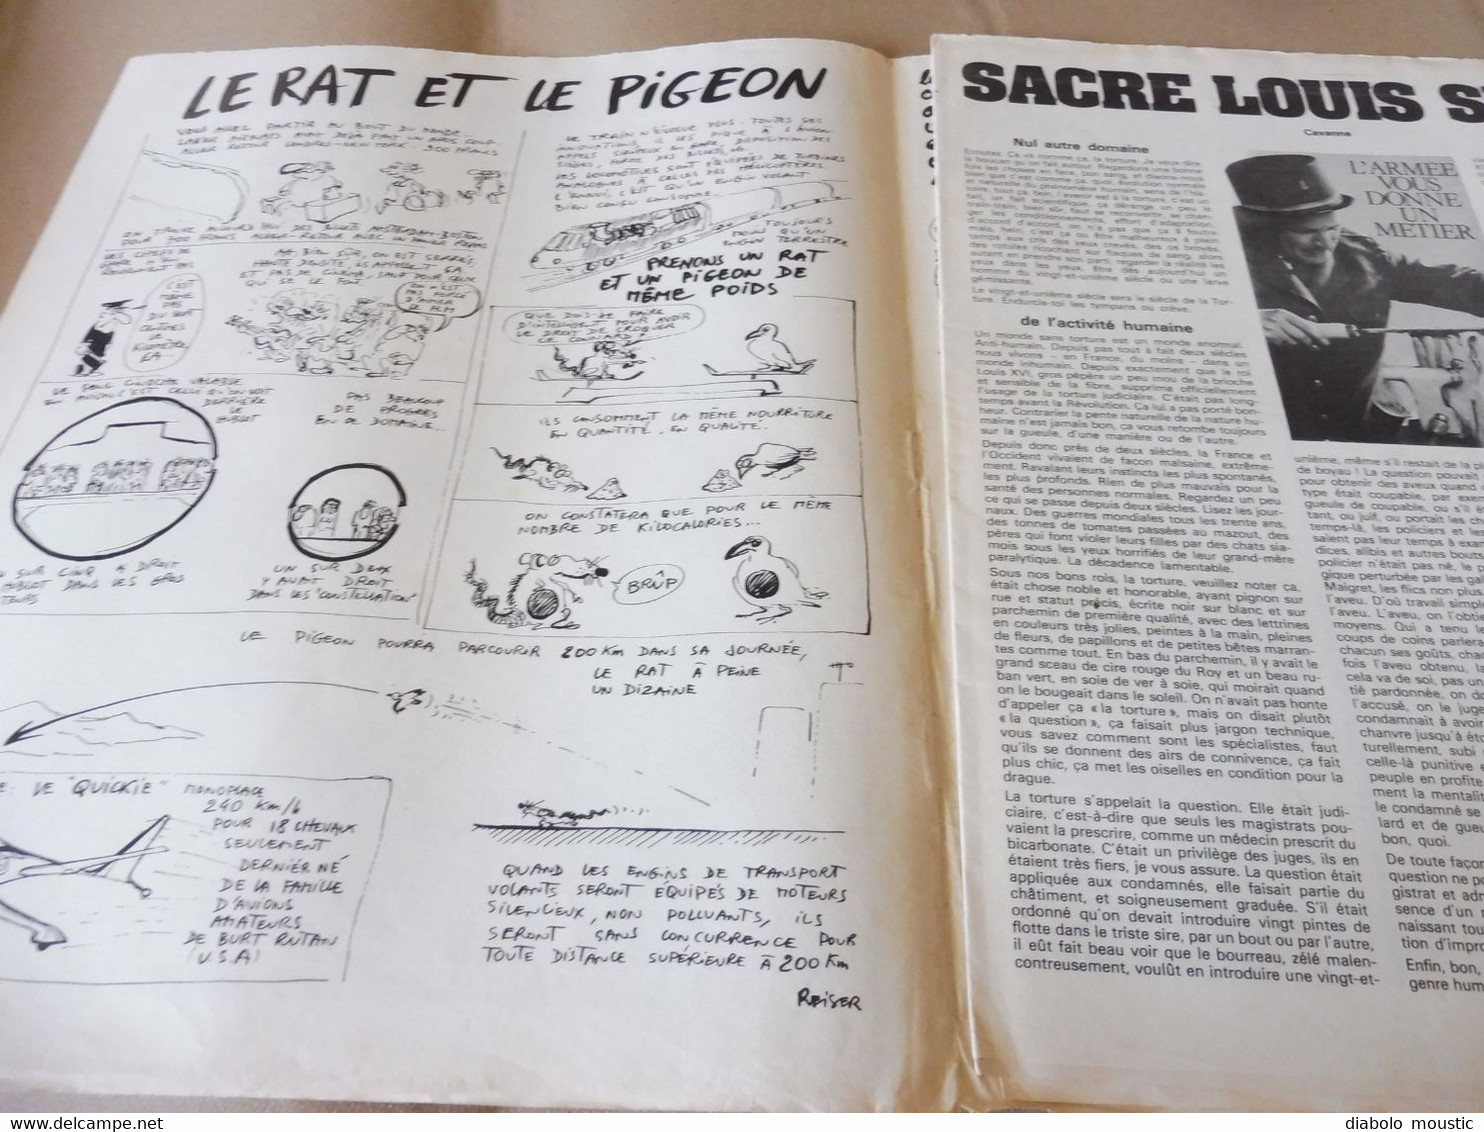 1978 MONACO : La Pègre En Liesse .................Etc  (Charlie Hebdo) - Humour